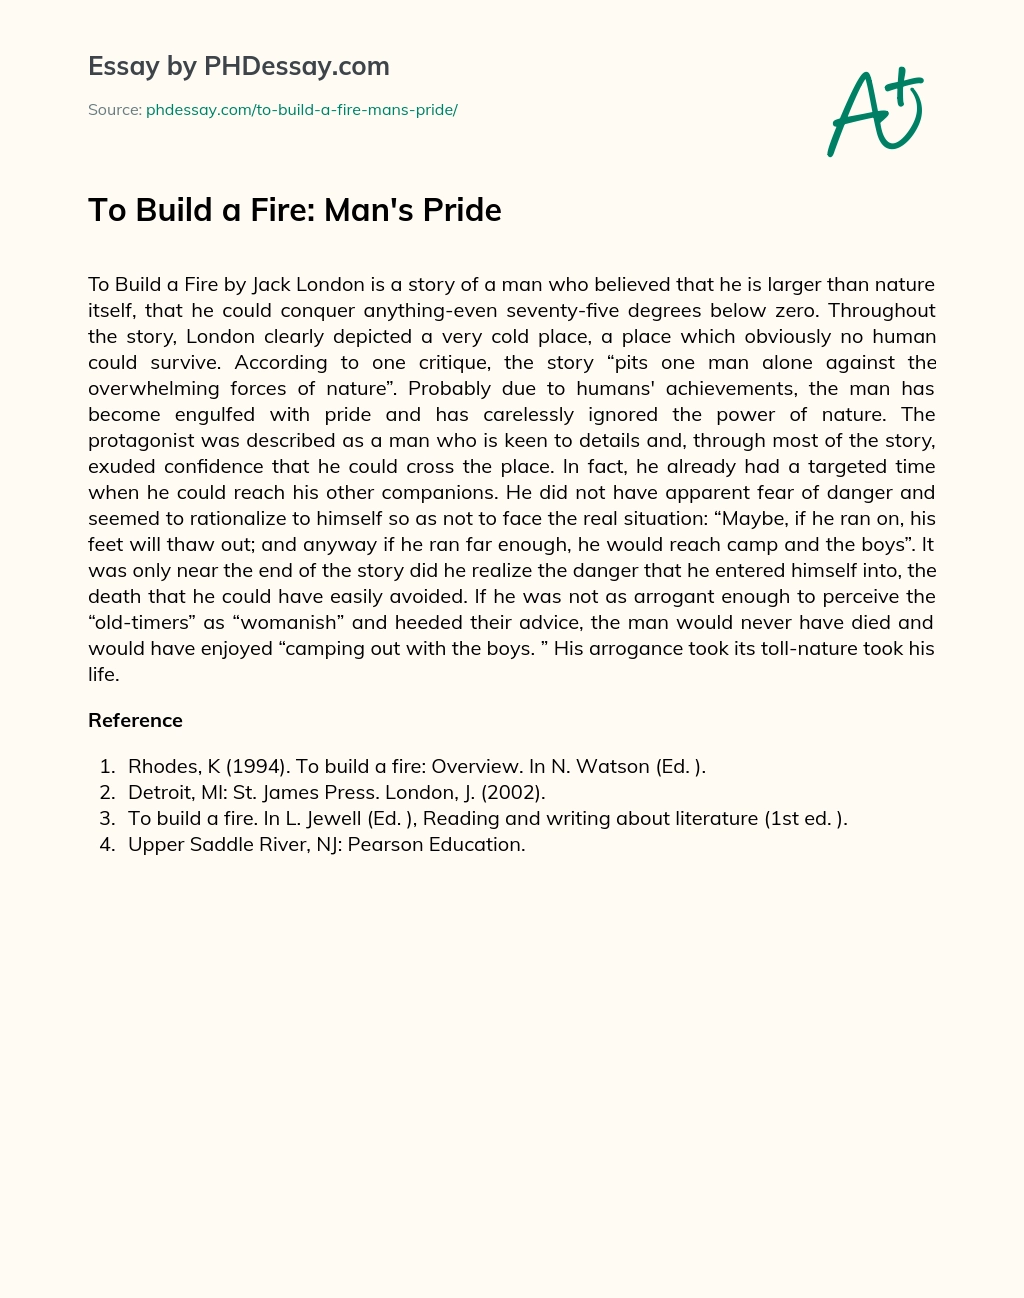 To Build a Fire: Man’s Pride essay